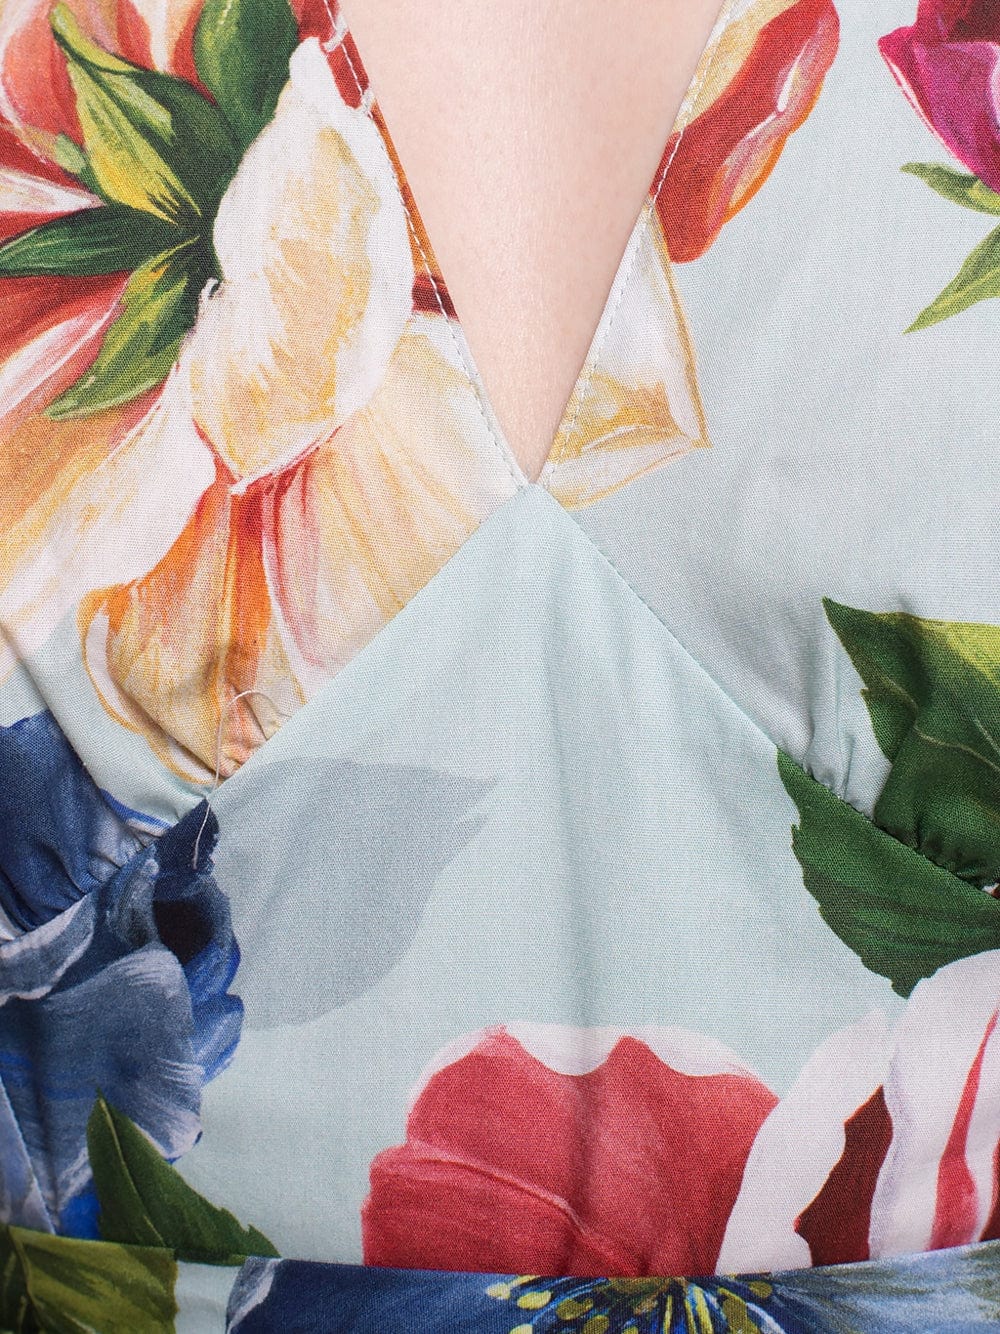 Dolce & Gabbana Floral Print V-neck Dress